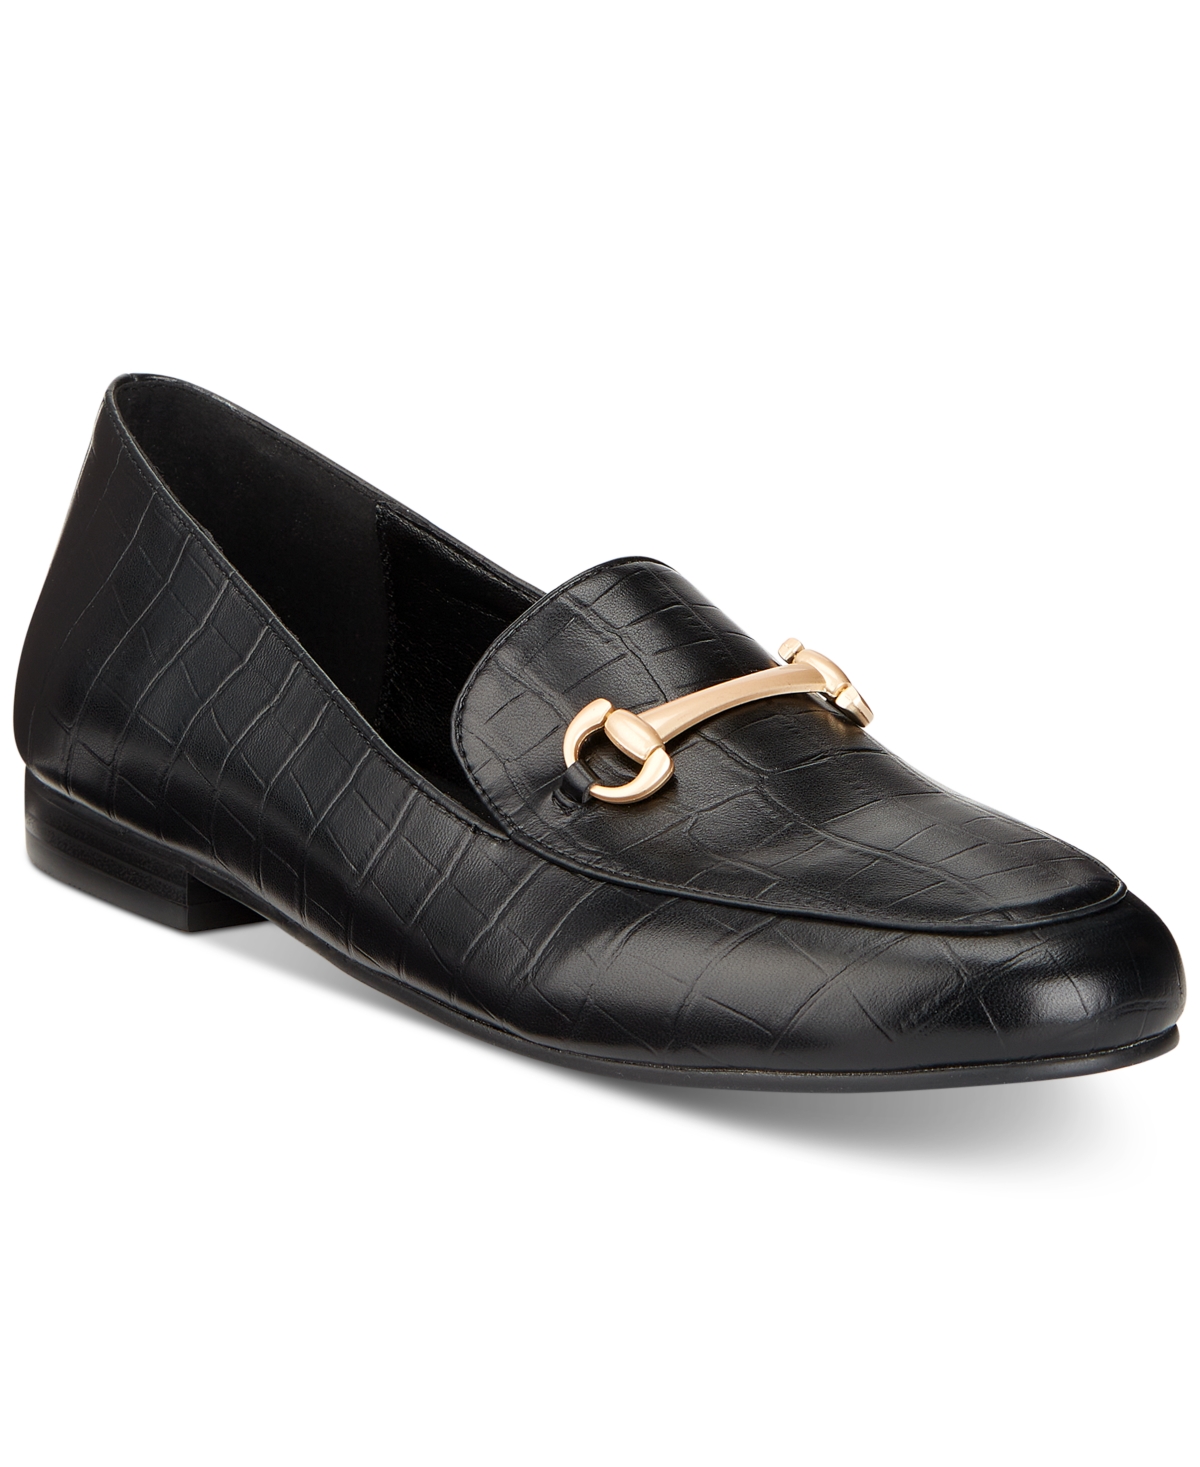 Women's Reese Slip-On Hardware Classic Loafer Flats-Extended sizes 9-14 - Burgundy